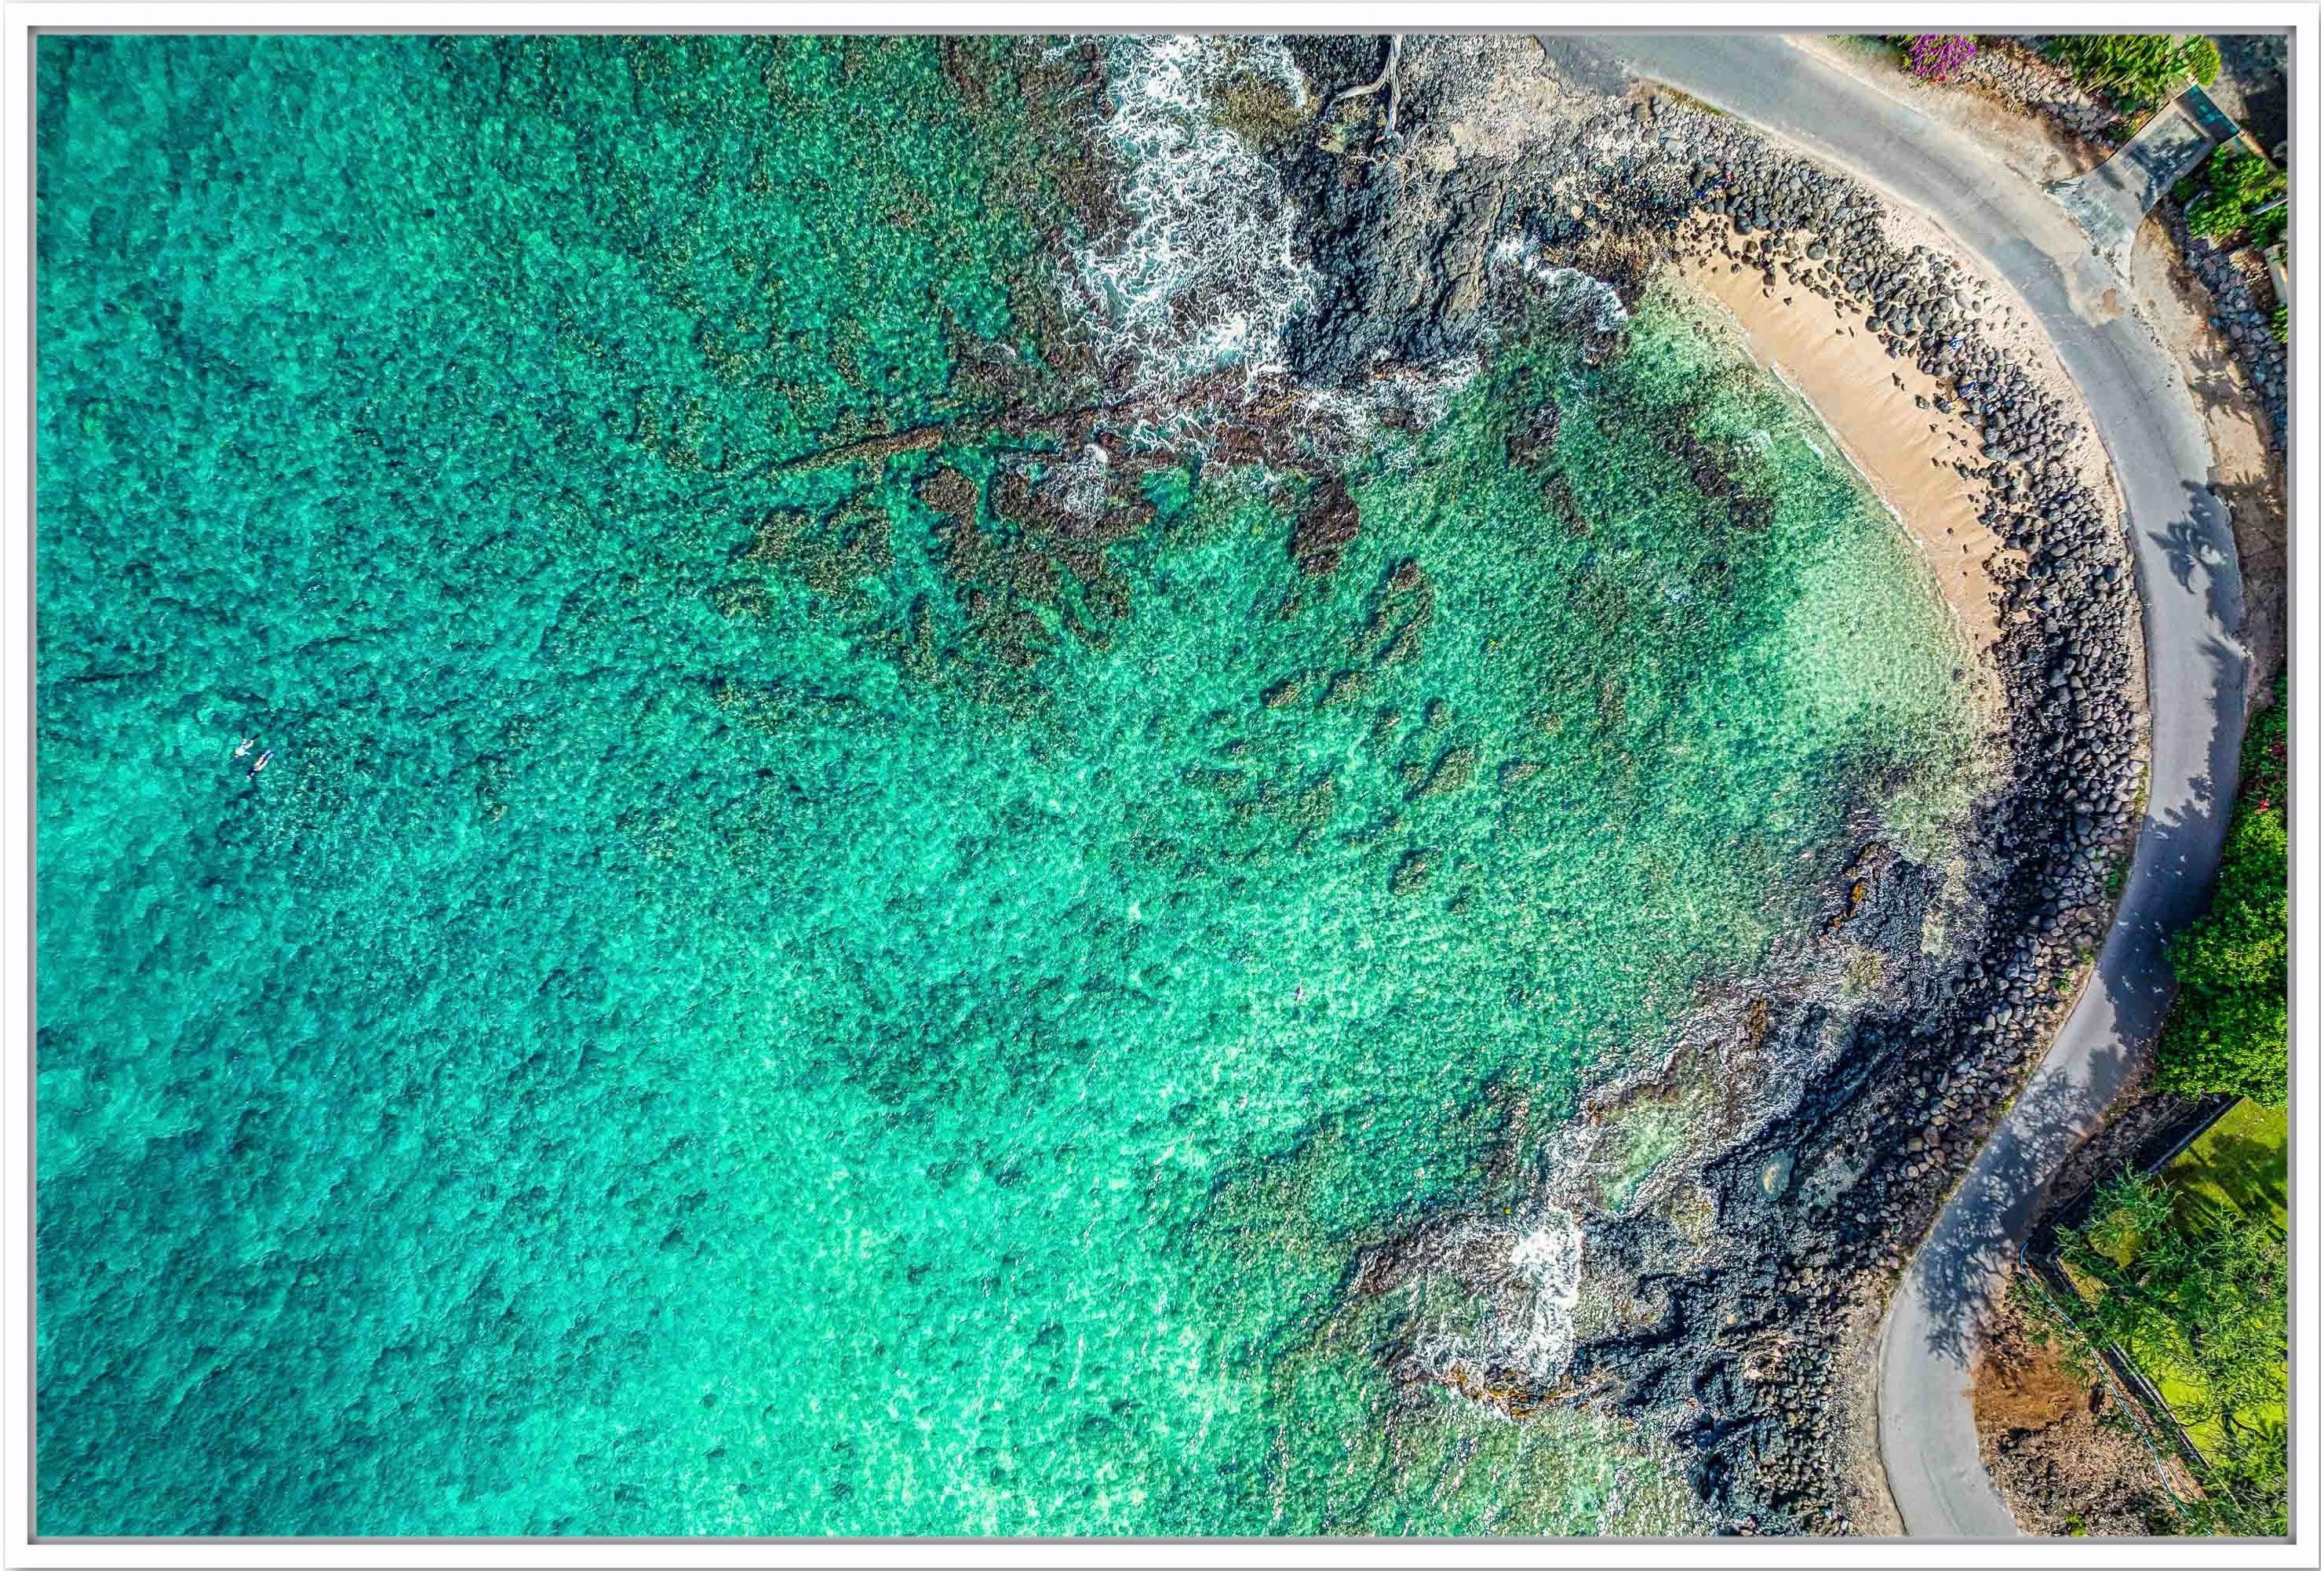 Hidden Gem - Living Moments Media - 3500-5500, 800-3500, beach, Best Moments, Best Sellers, Best Wall Artwork, black, blue, Cove, green, Hawaii, horizontal, Island, makena, maui, Maui Hawaii Fine Art Photography, Maui Hawaii Wall Art, new arrivals, New Moments, ocean, open-edition, over-5500, Reef, rocks, sand, size-16x-24, size-24-x-36, size-40-x-60, teal, waves